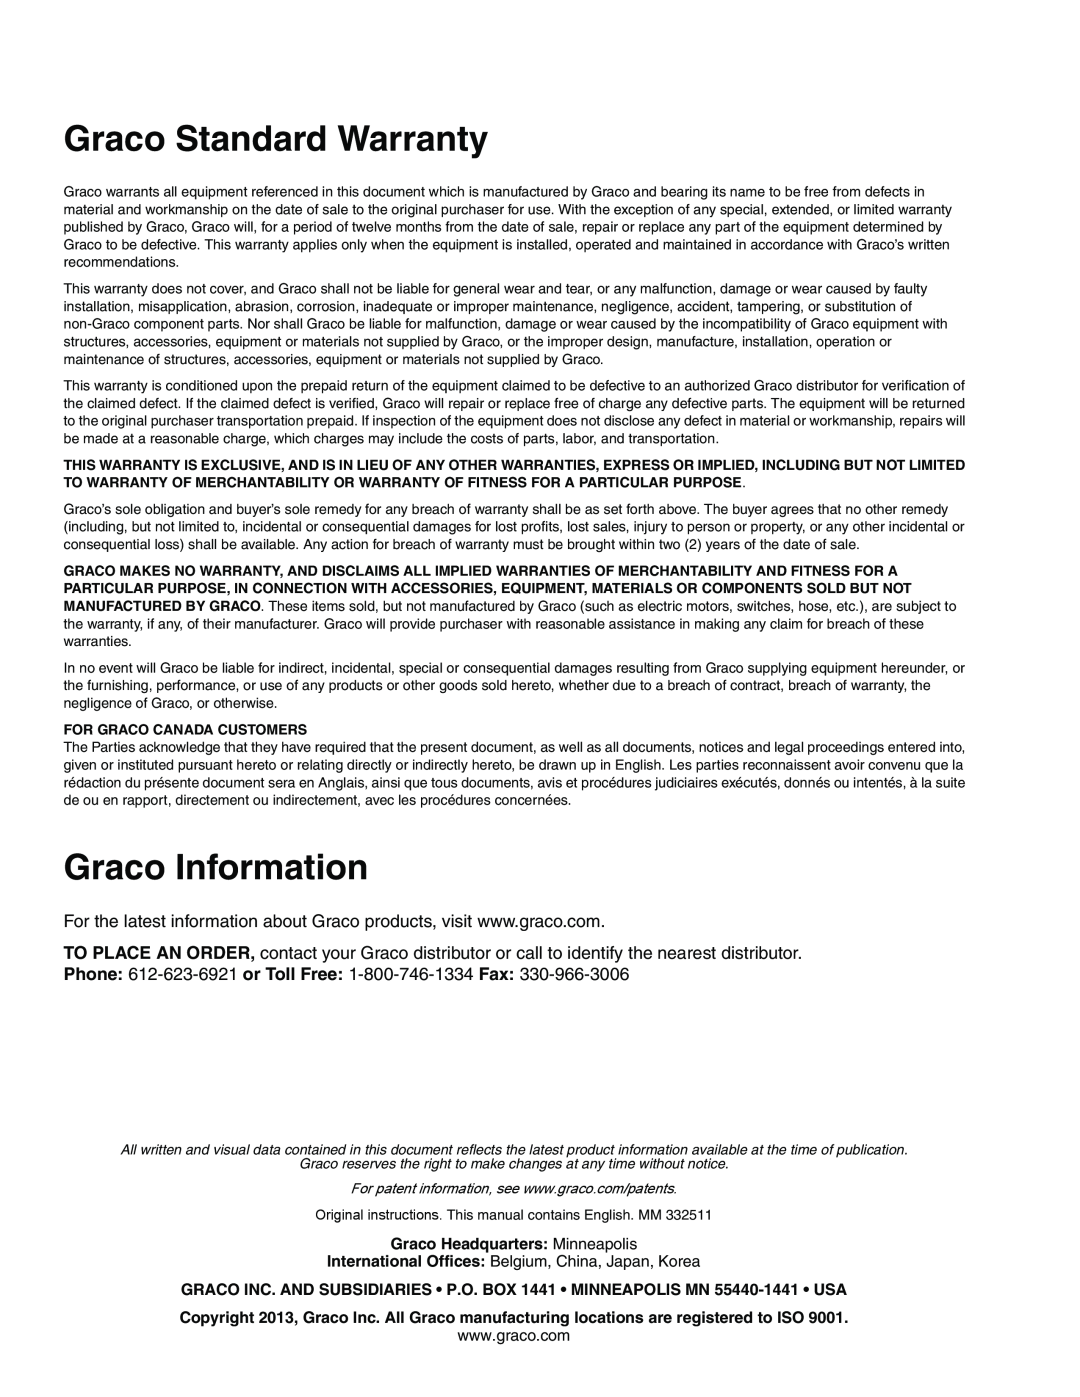 Graco 24R200 operation manual Graco Standard Warranty, Graco Information 